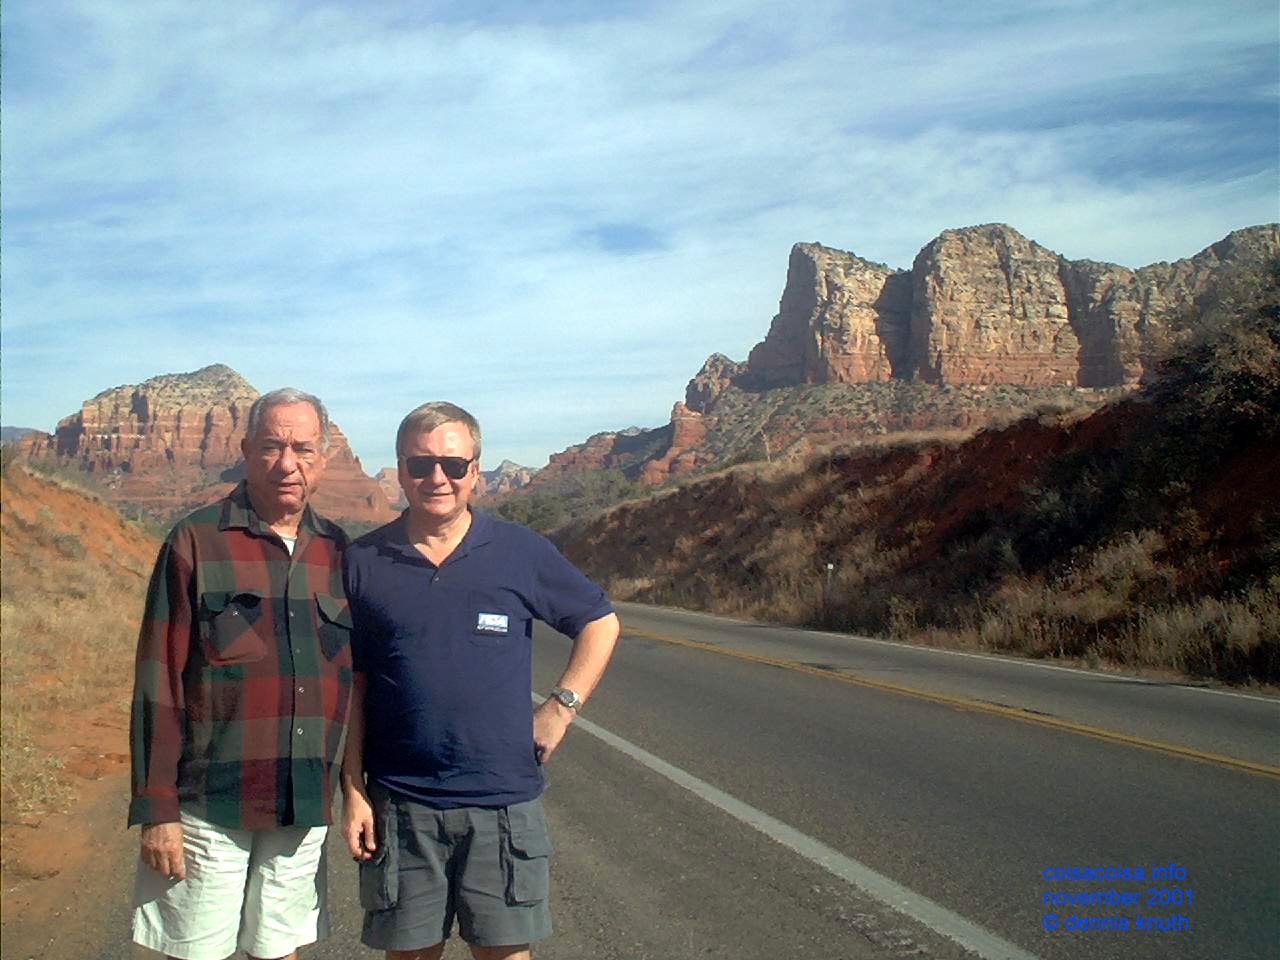 Dennis Knuth and Muscio on the Highway into Sedona